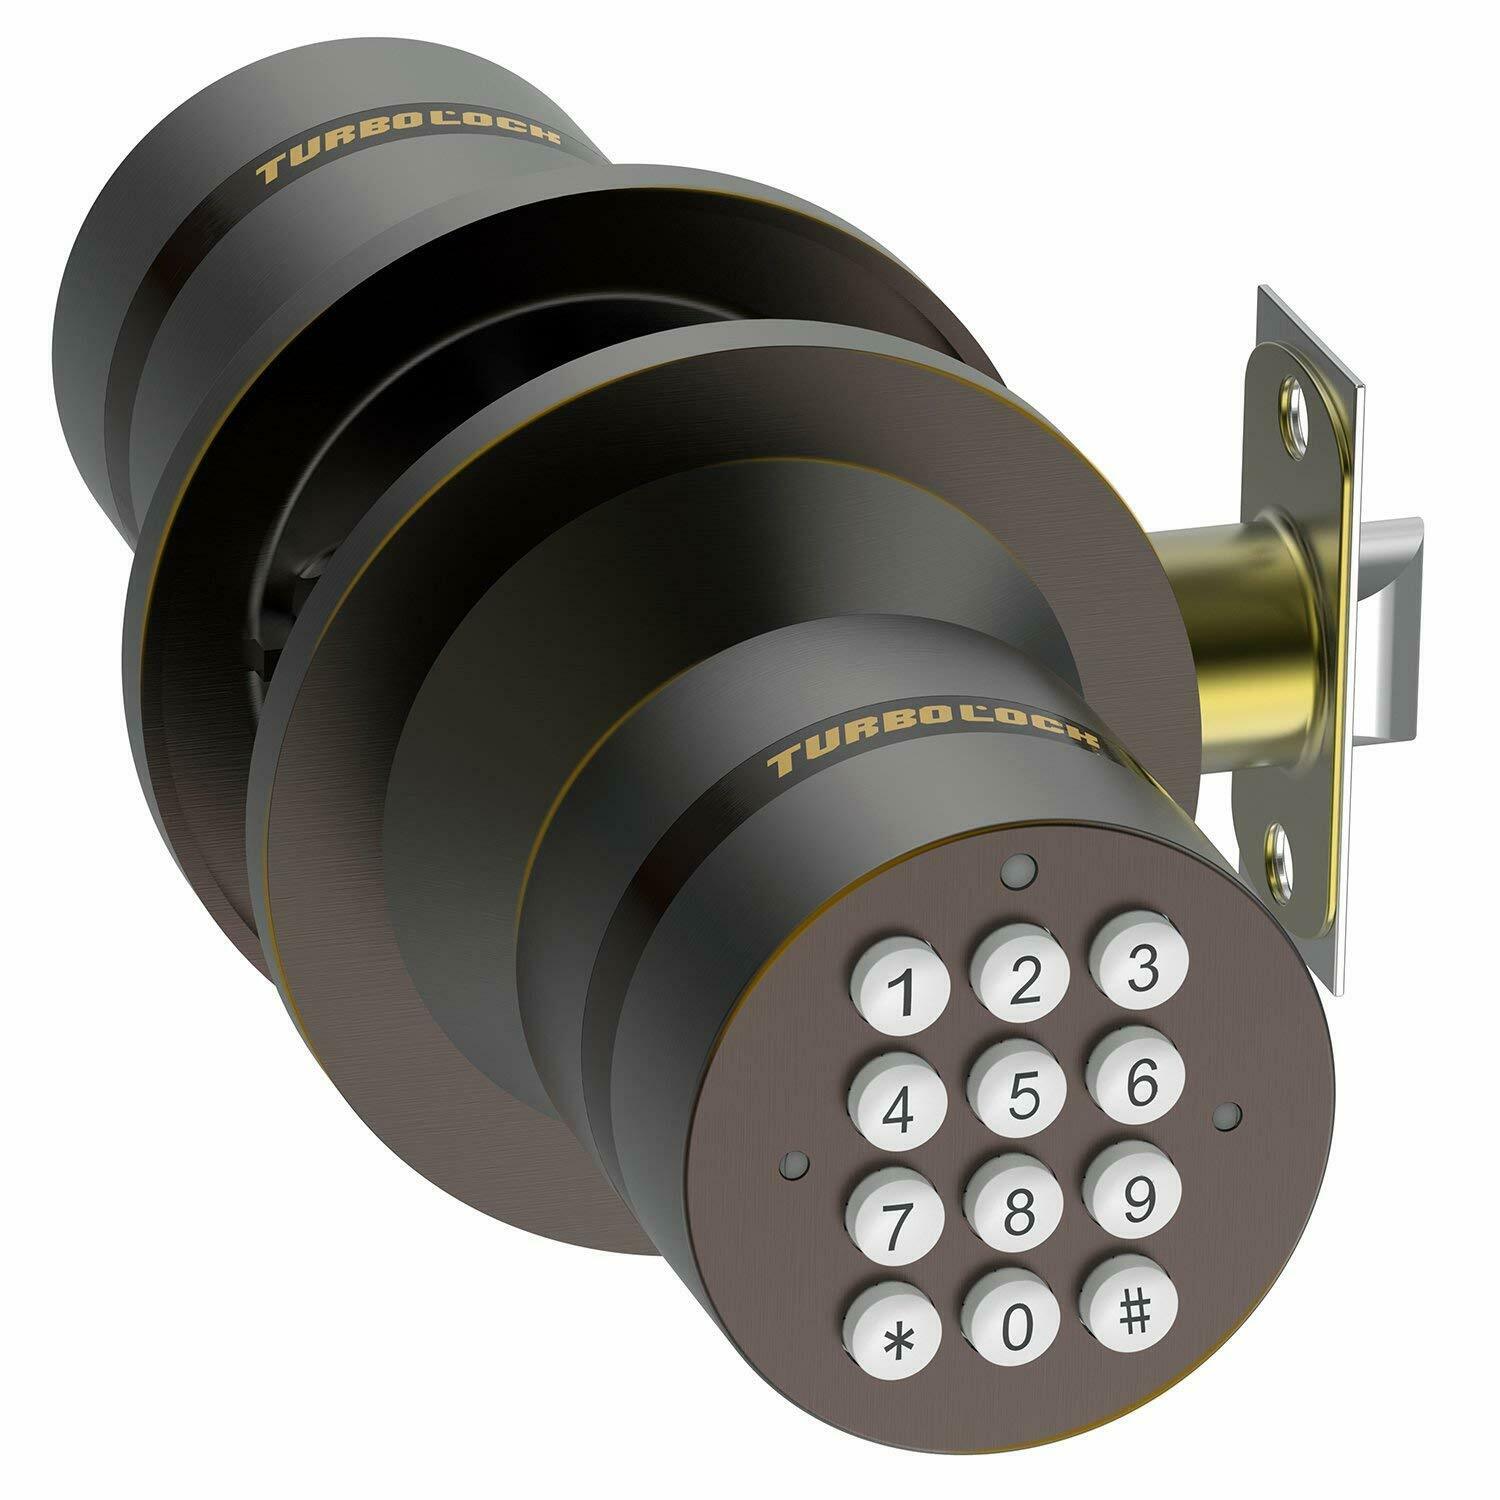 Turbolock Keyless Electronic Keypad Entry Smart Door Lock With Automatic Locking